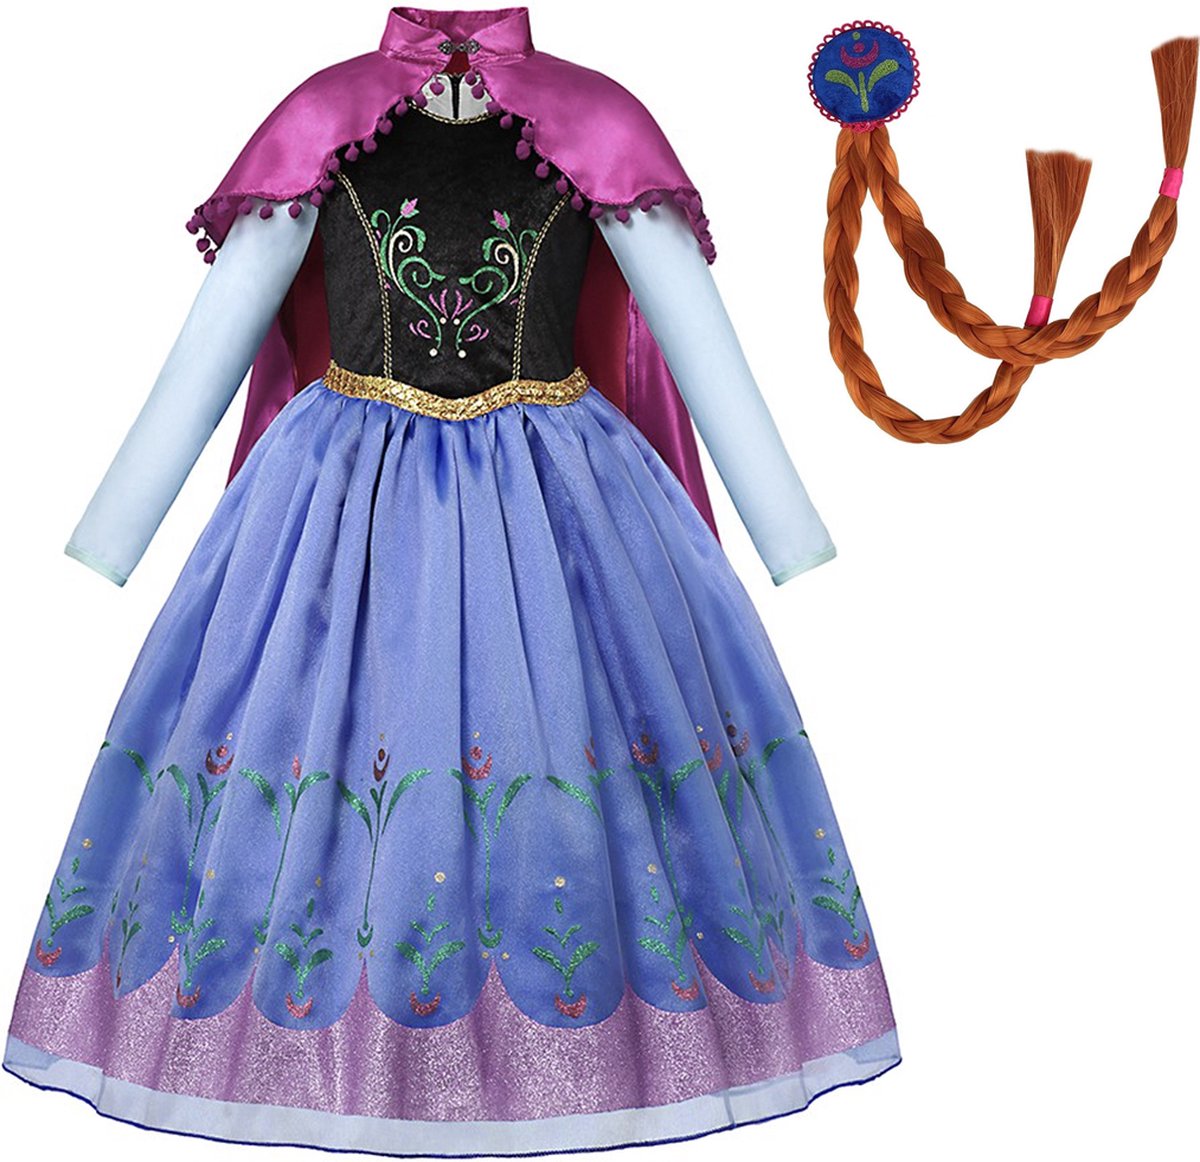 Prinsessenjurk meisje - Verkleedkleding meisje - Het Betere Merk - Lange roze cape - Haarvlecht - Maat 134/140 (140) - Carnavalskleding - Cadeau meisje - Verkleedkleren - Kleed